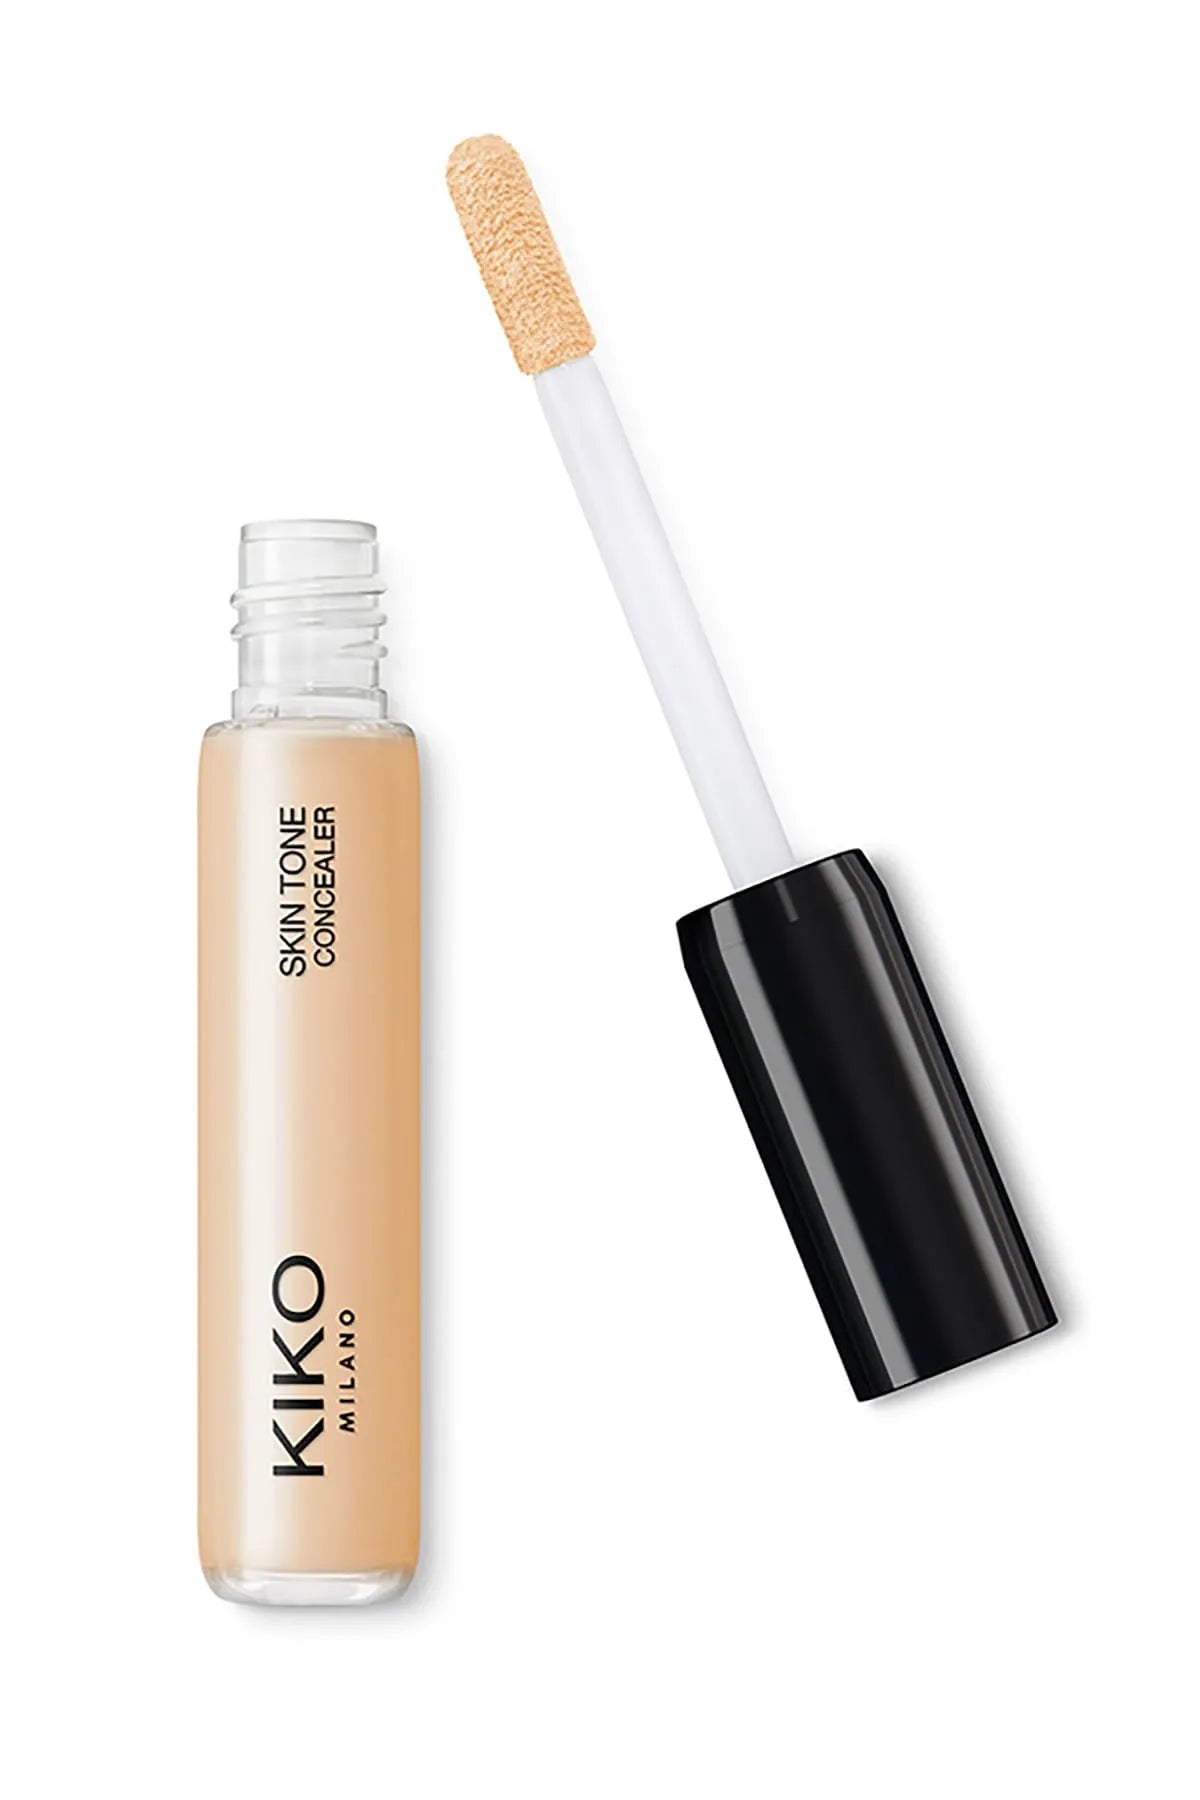 Kiko Skin Tone Honey Concealer